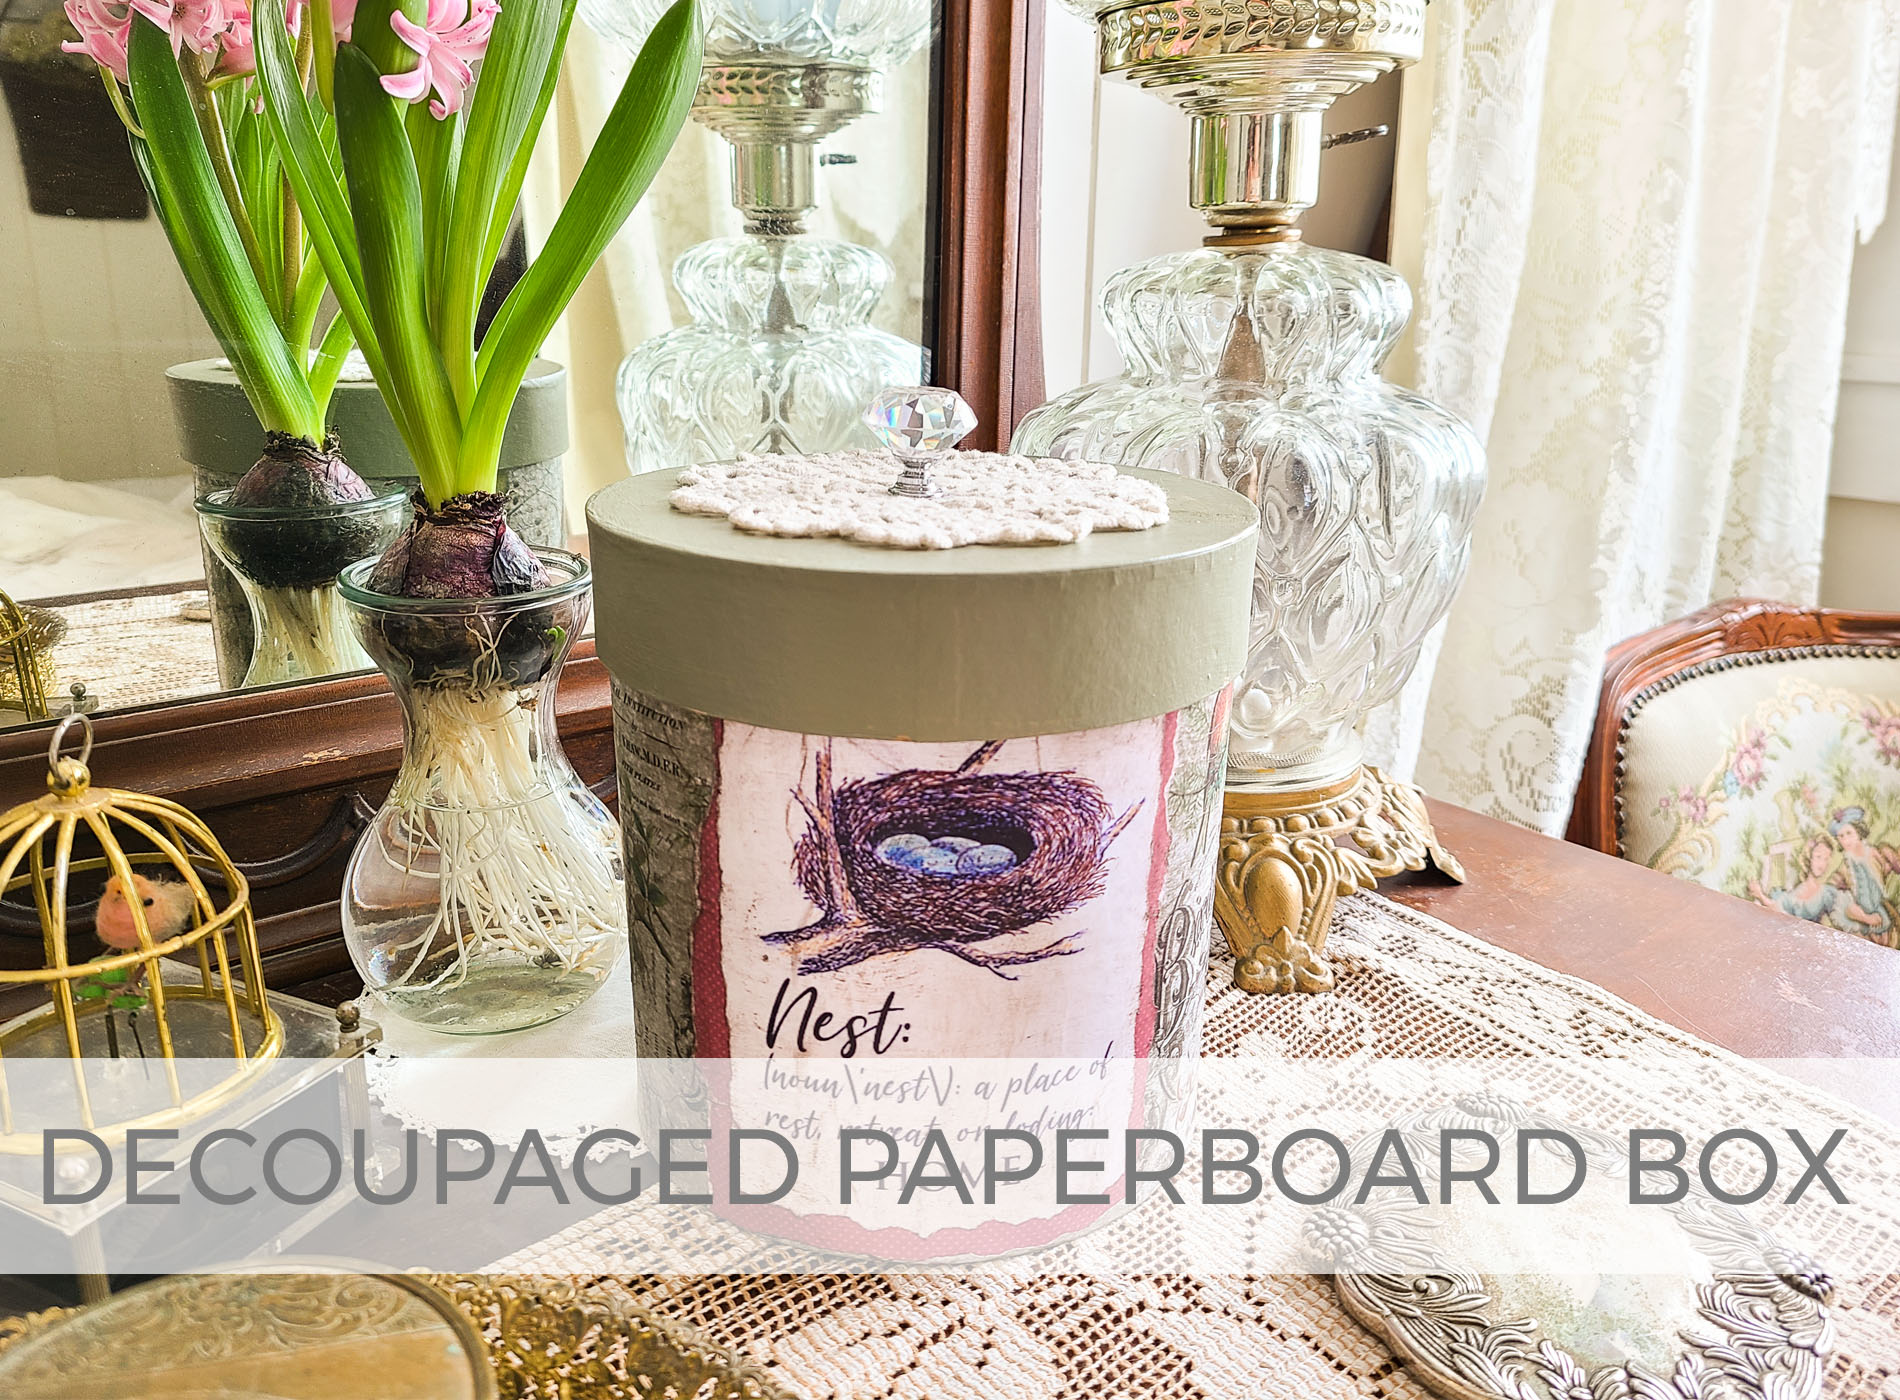 DIY Decoupaged Paperboard Box Tutorial by Larissa of Prodigal Pieces | prodigalpieces.com #prodigalpieces